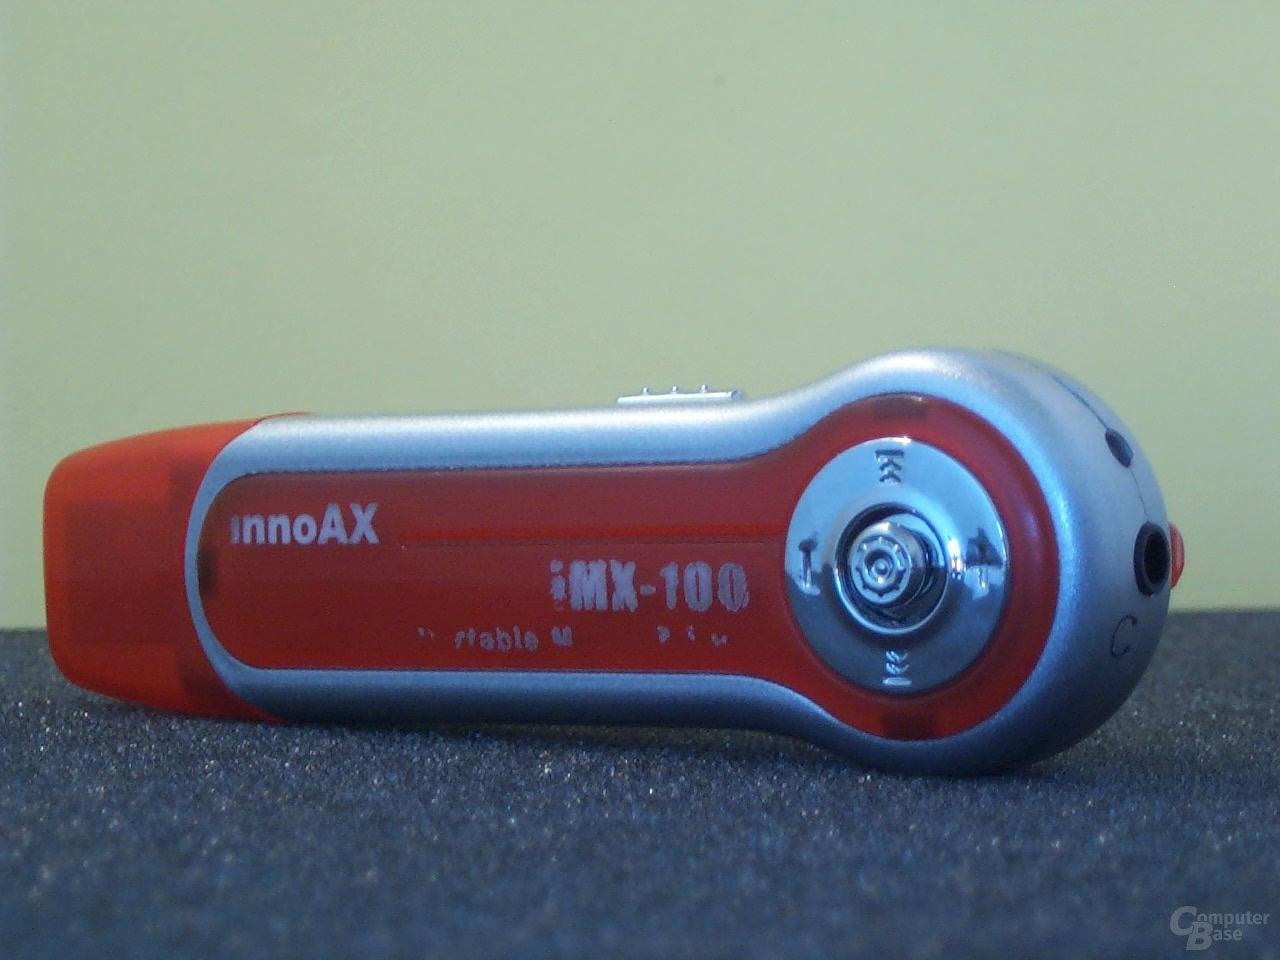 InnoAX imx-100